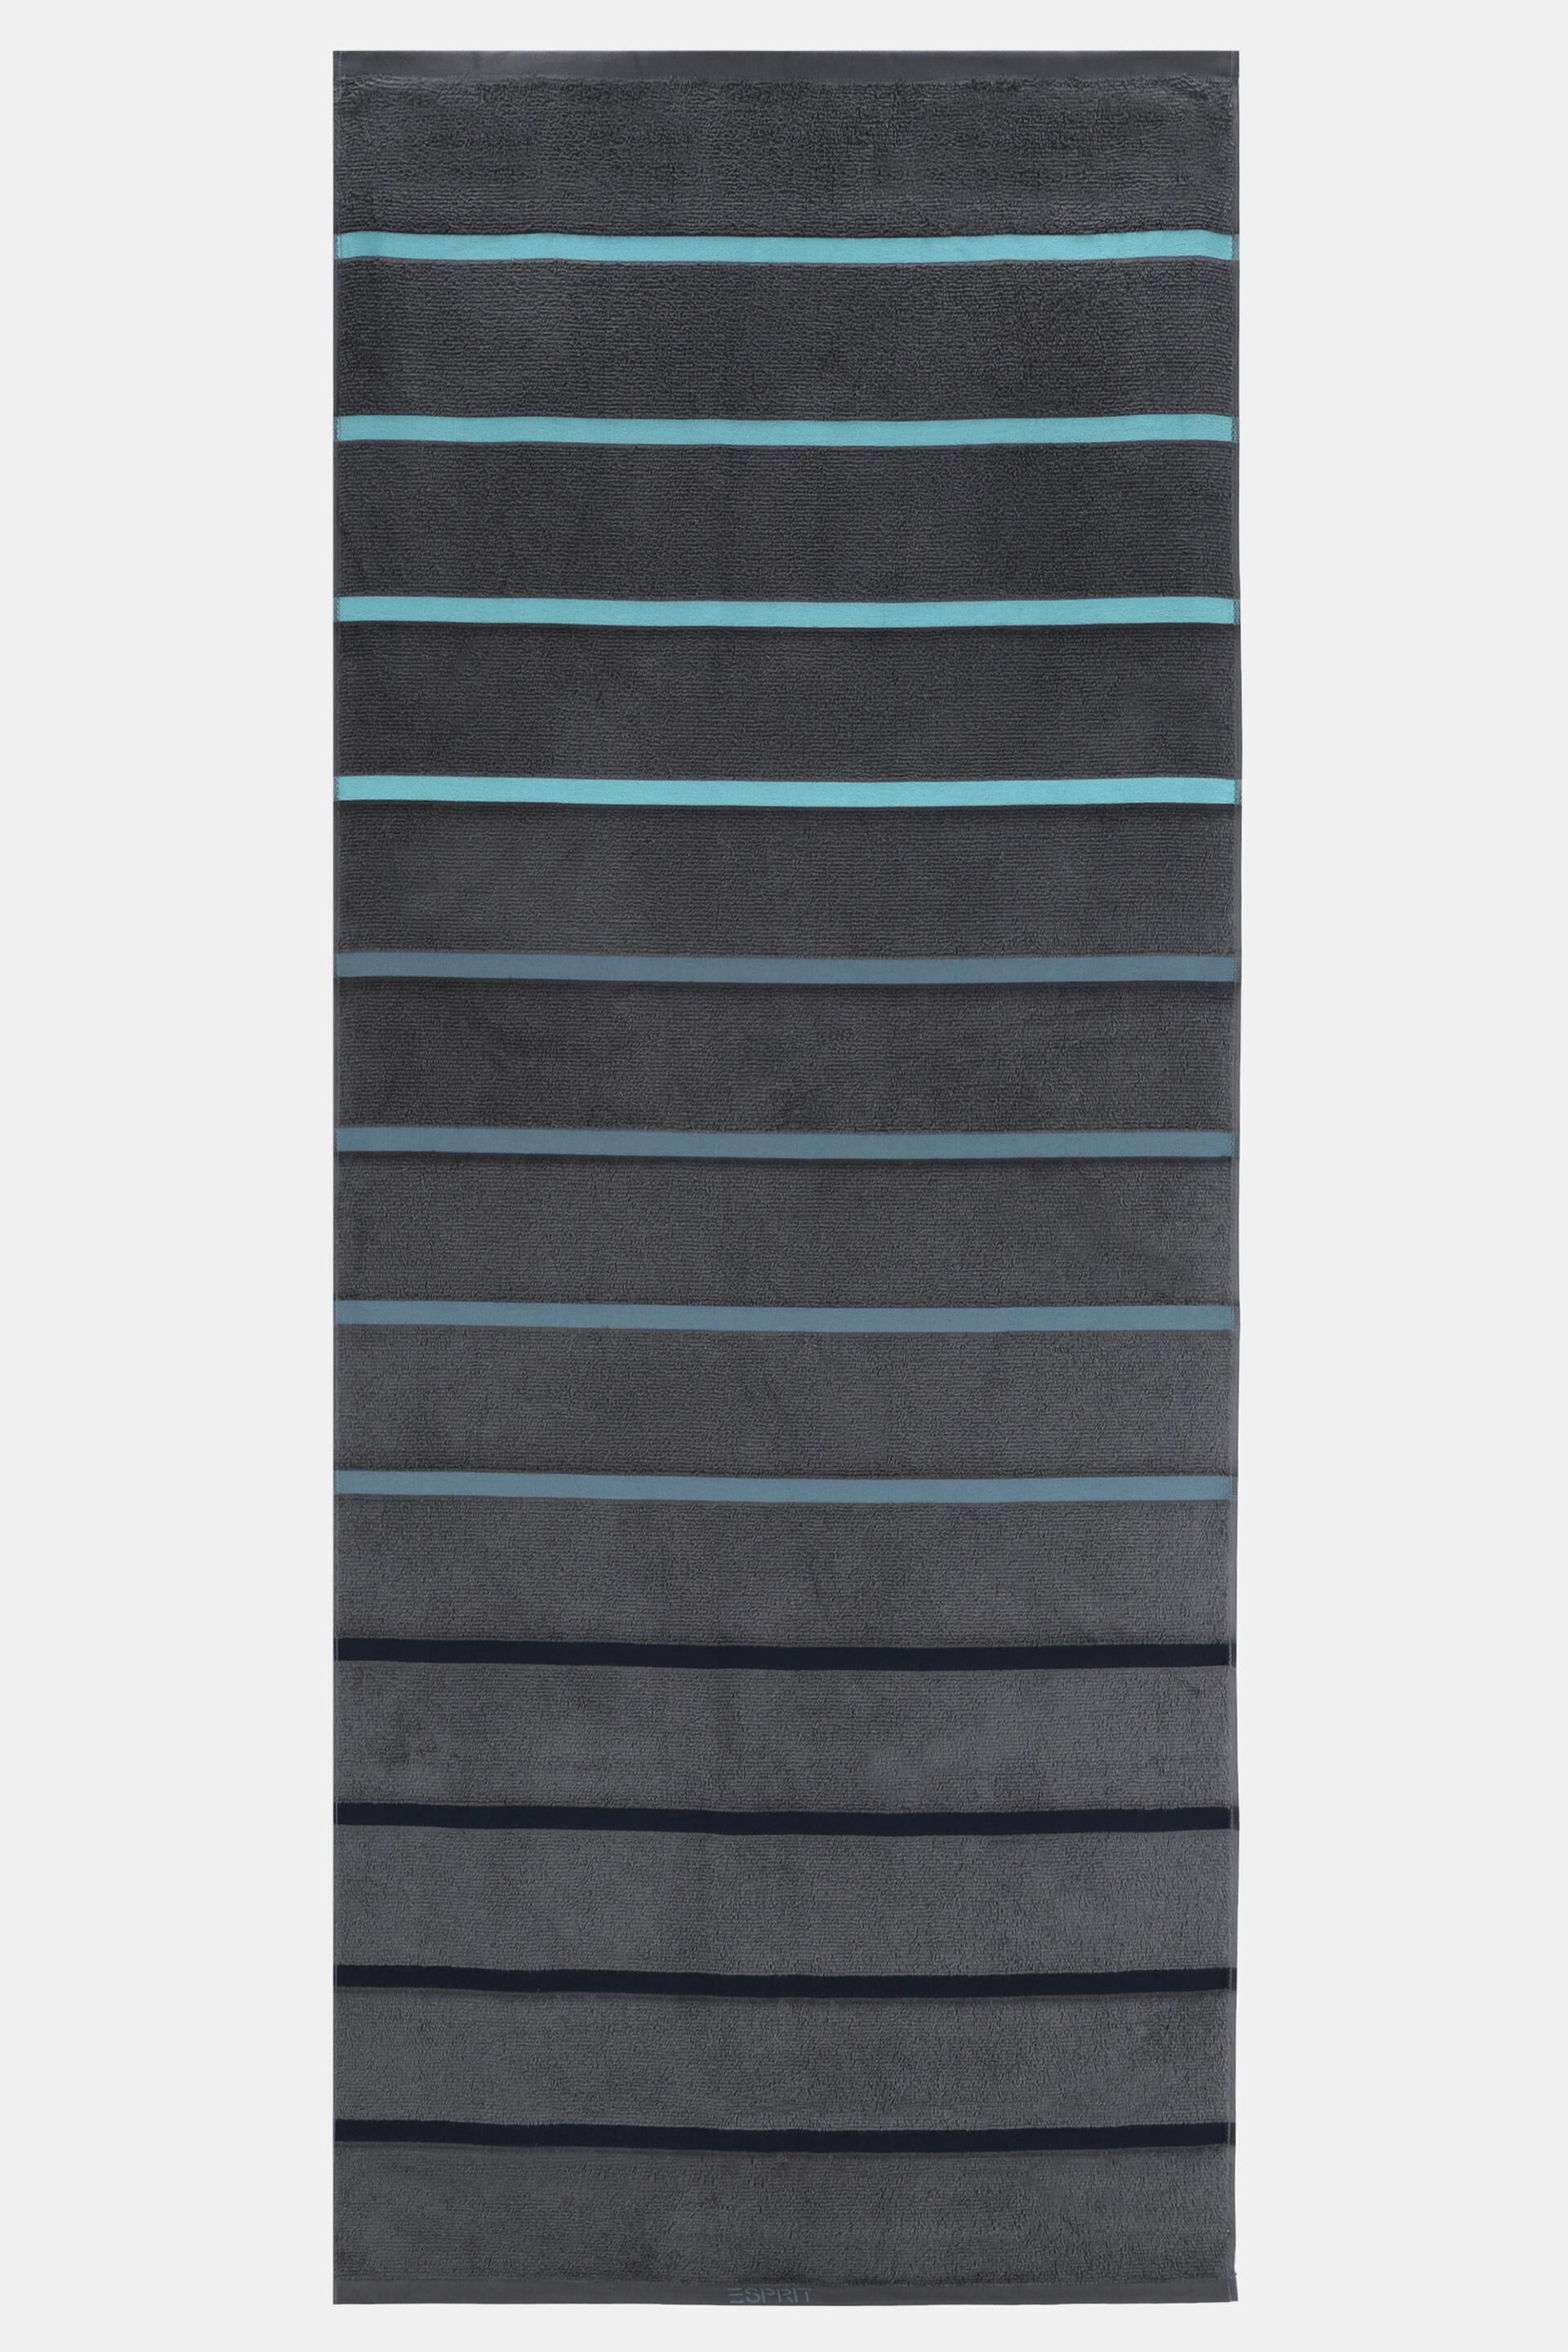 Esprit sauna towel stripes Relax with